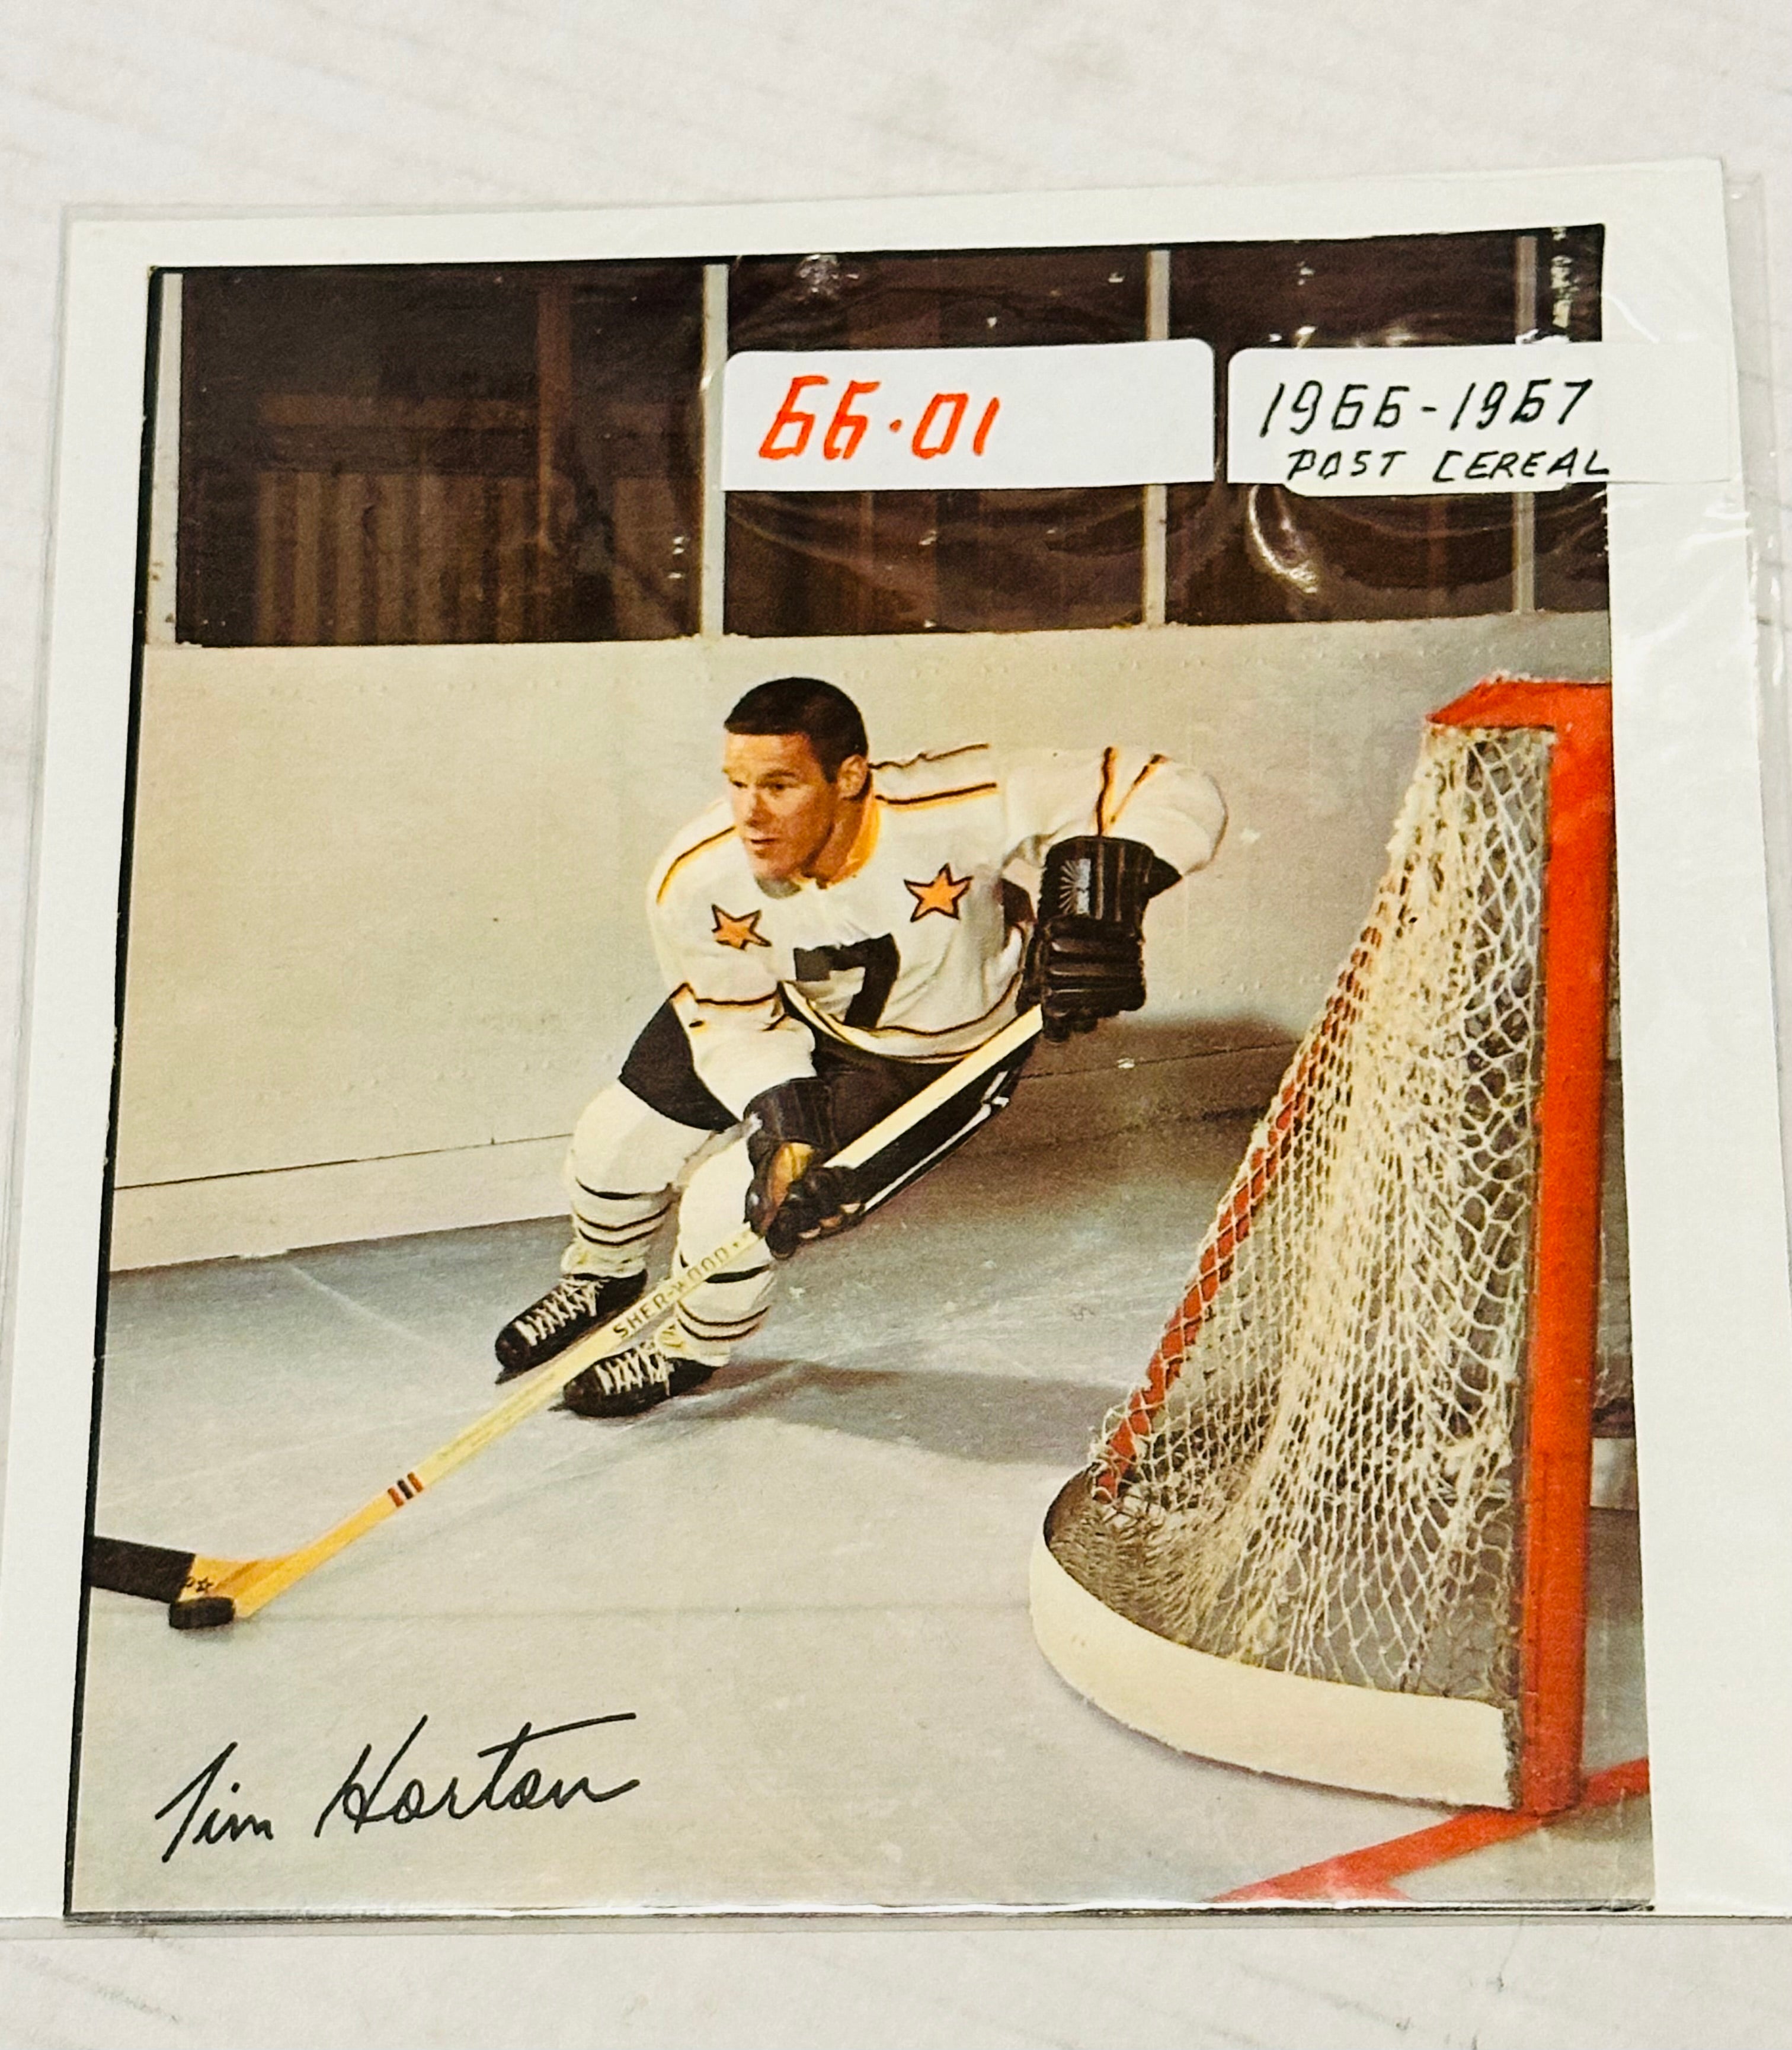 Tim Horton post cereal rare box back hockey card 1966-67